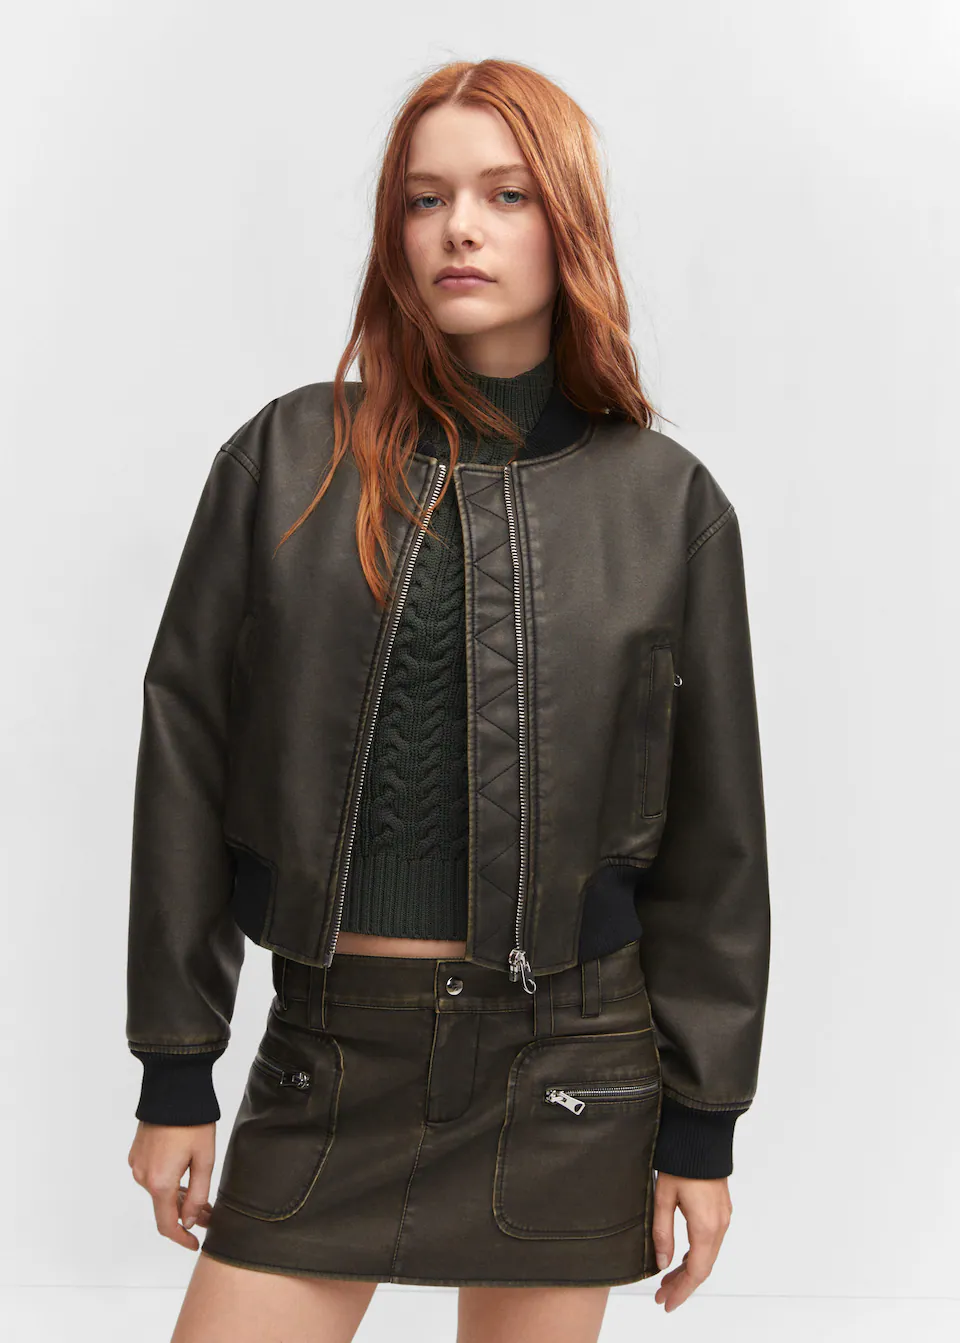 Get Gigi Hadid Street Style With A Mango Leather Jacket